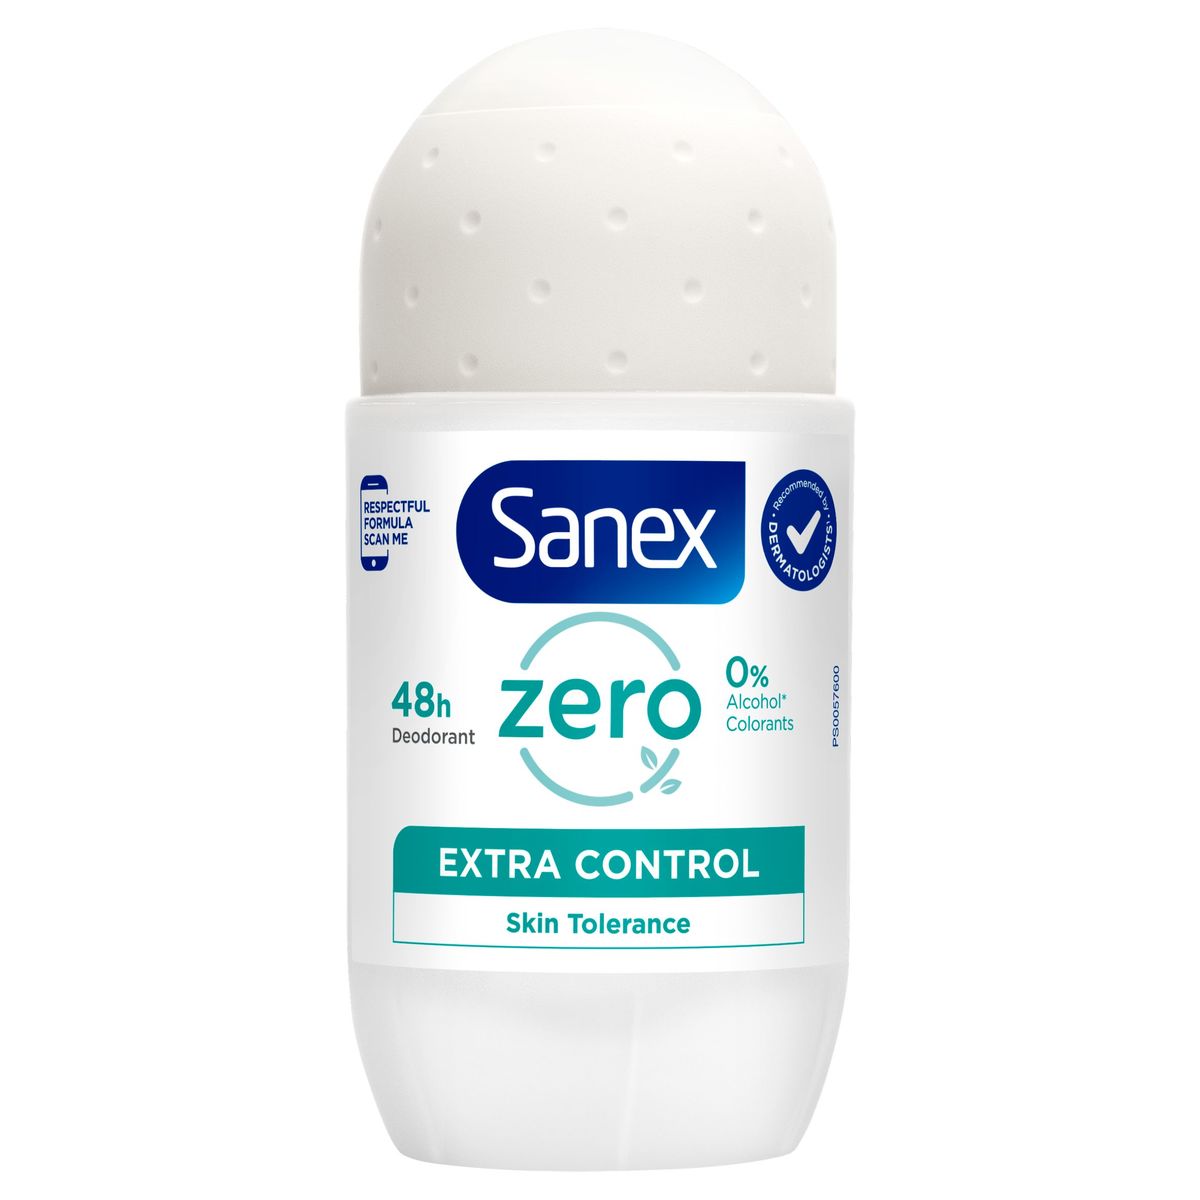 Sanex Zero% Extra Control Deodorant Roller 50 ml